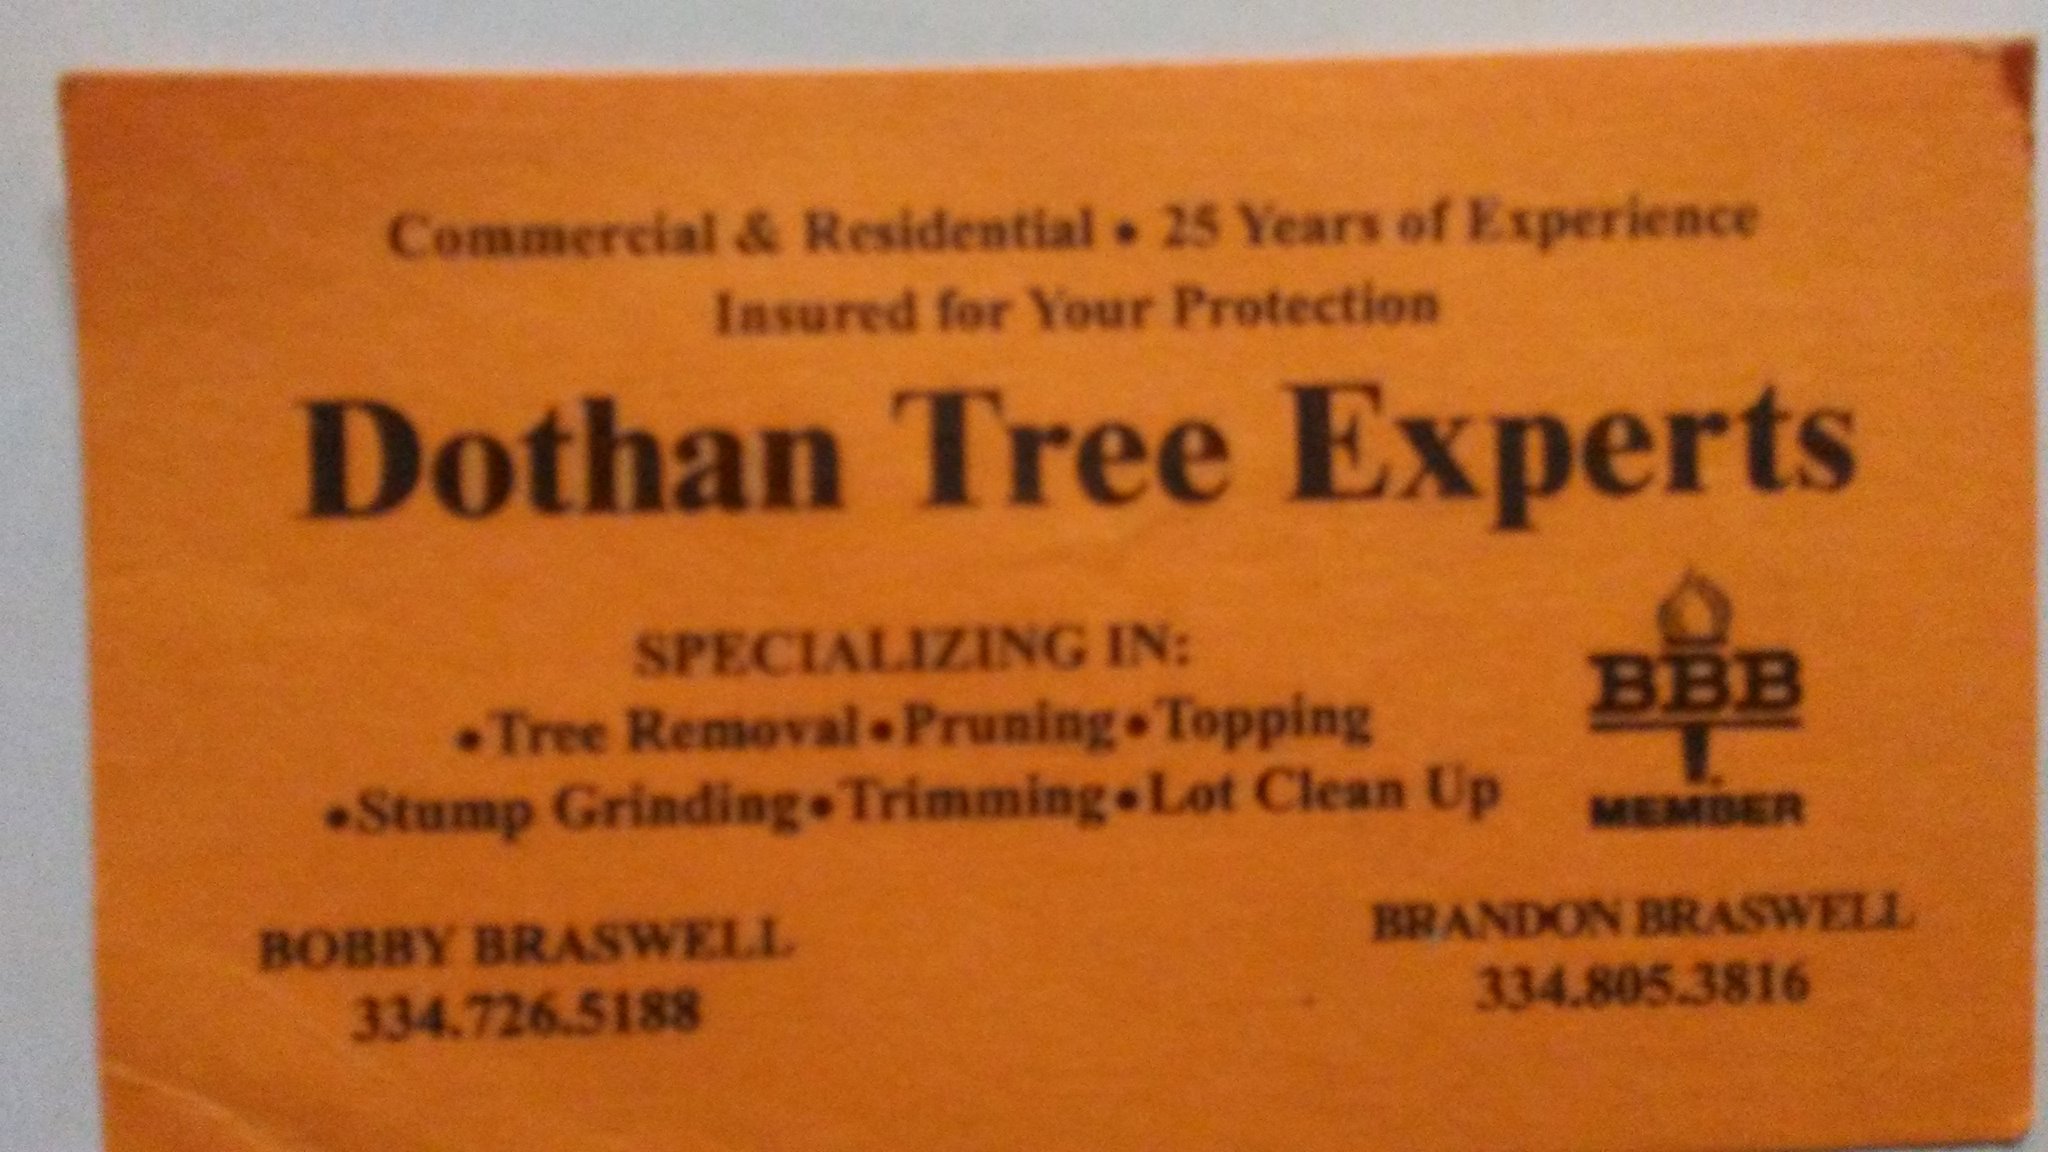 Dothan Tree Experts